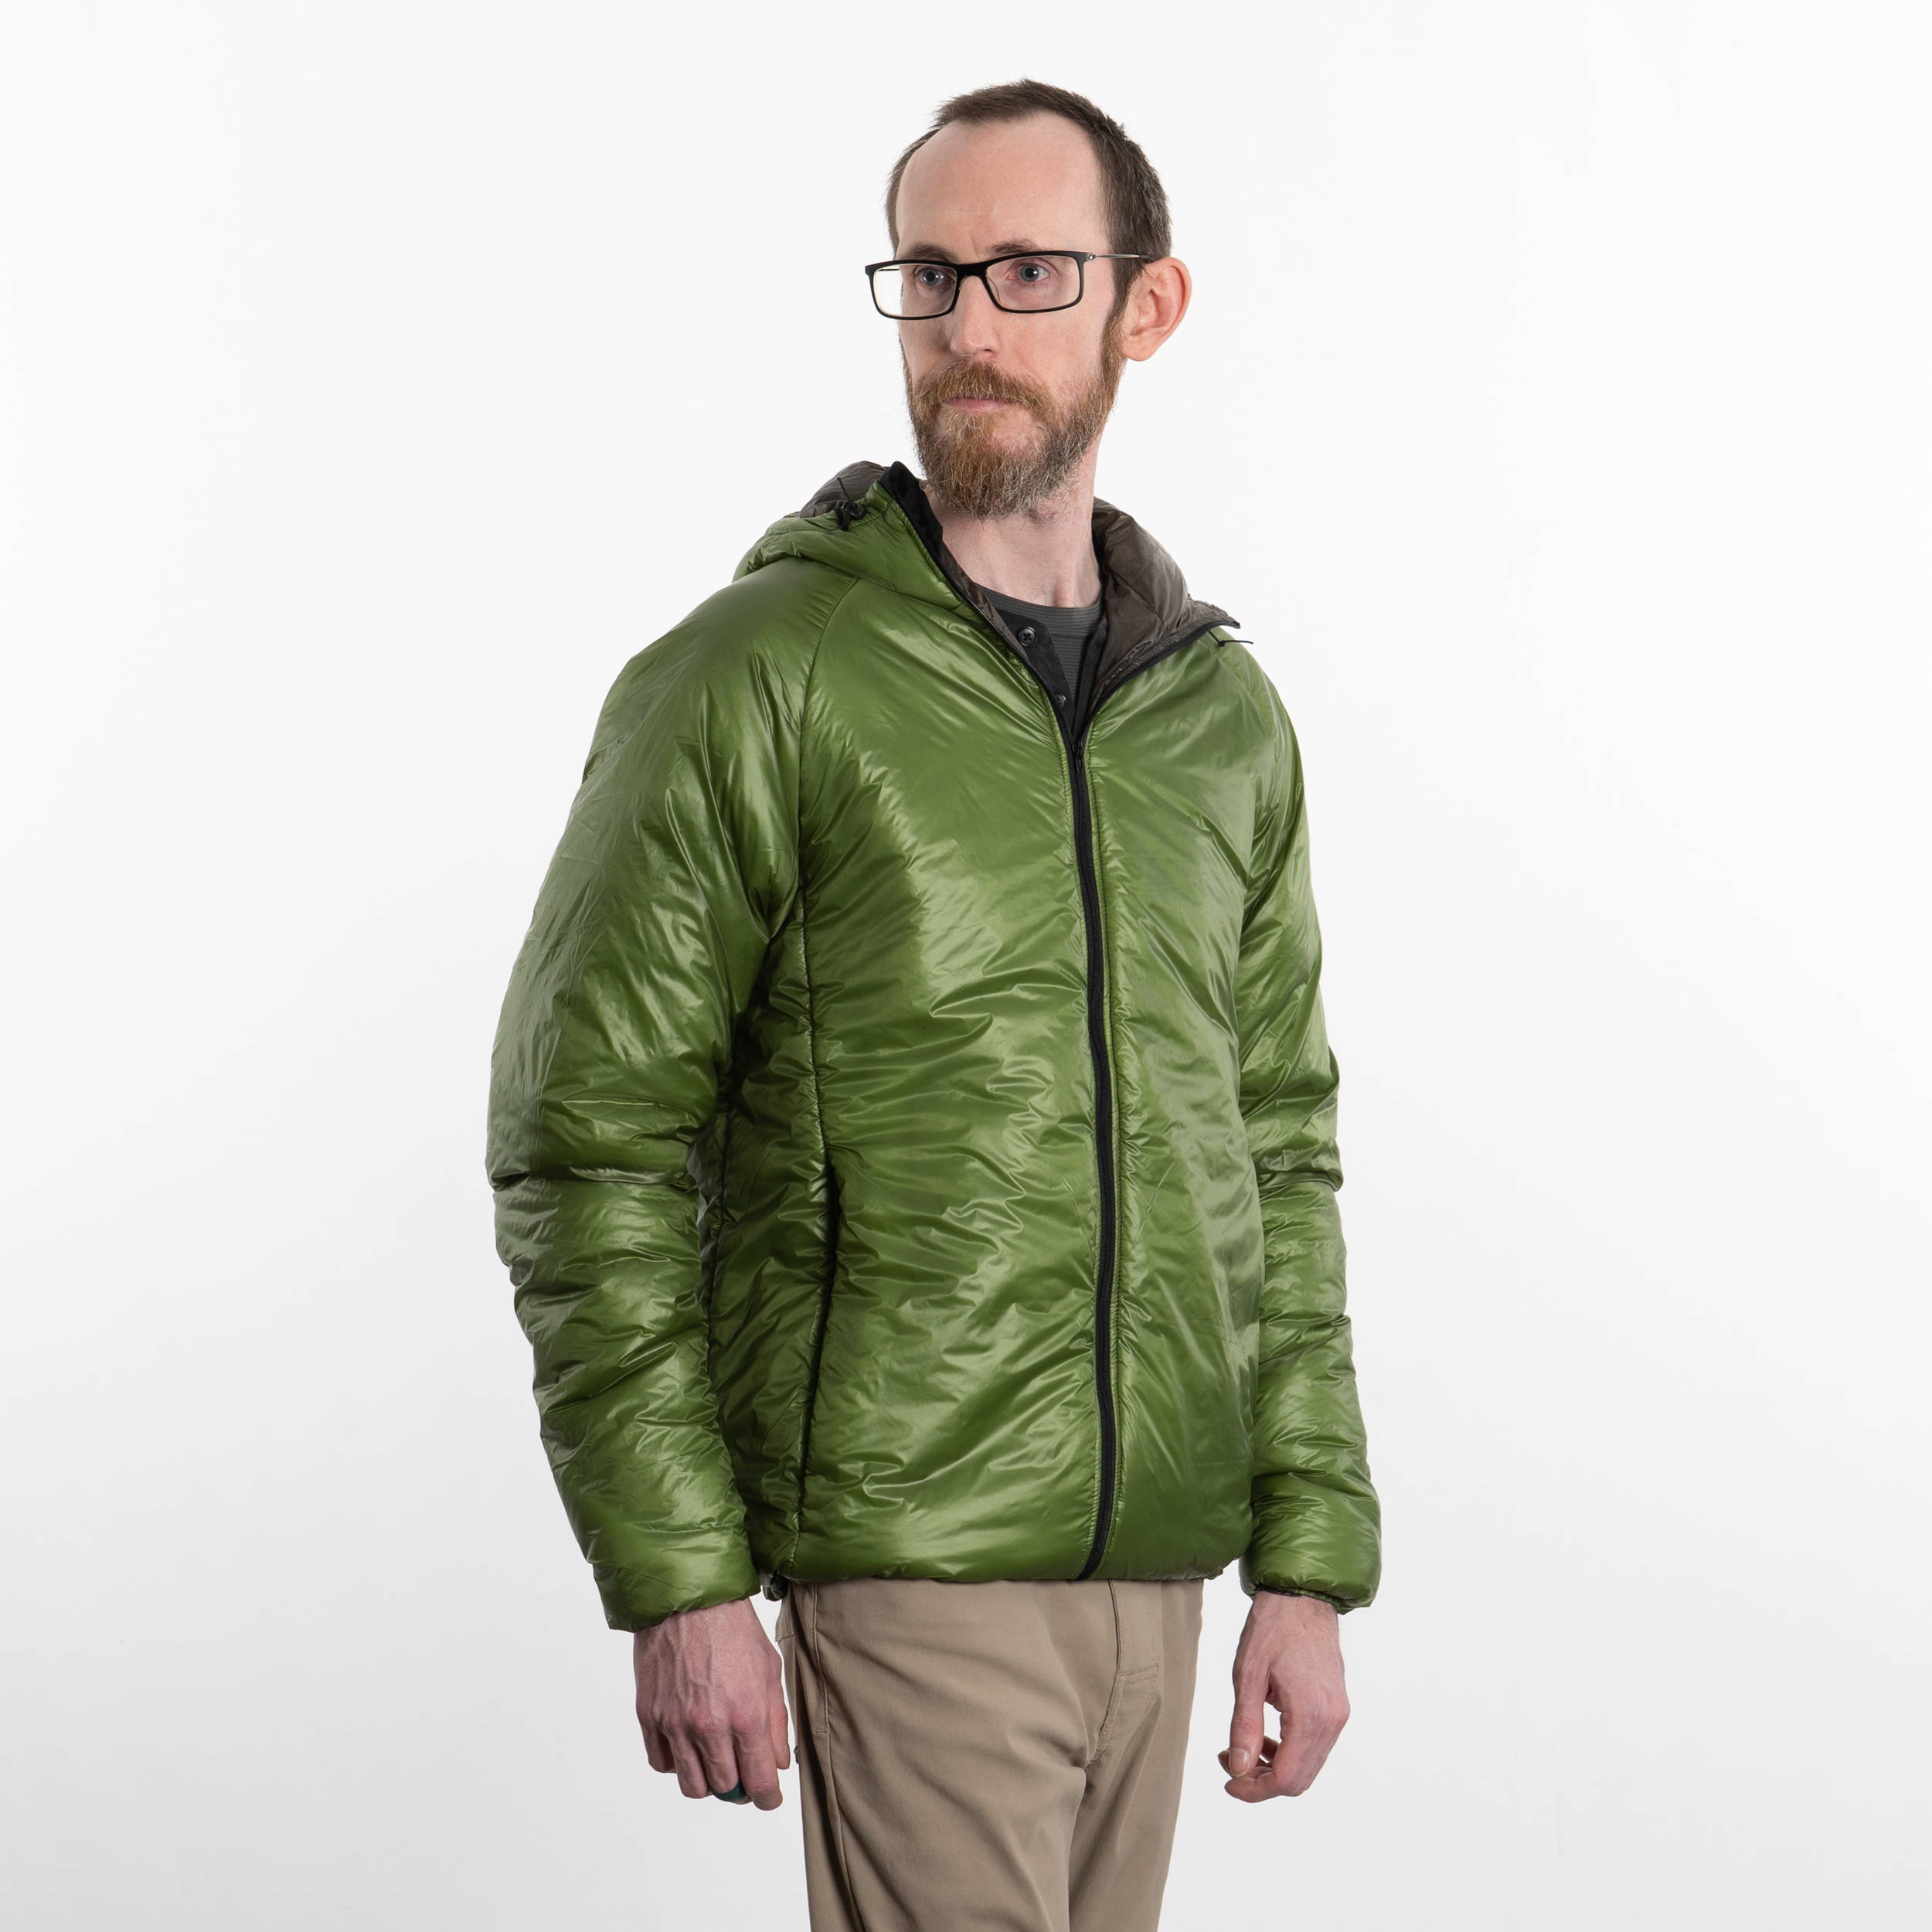 Torrid APEX Jacket | Ultralight Ultra-warm Insulated Jacket